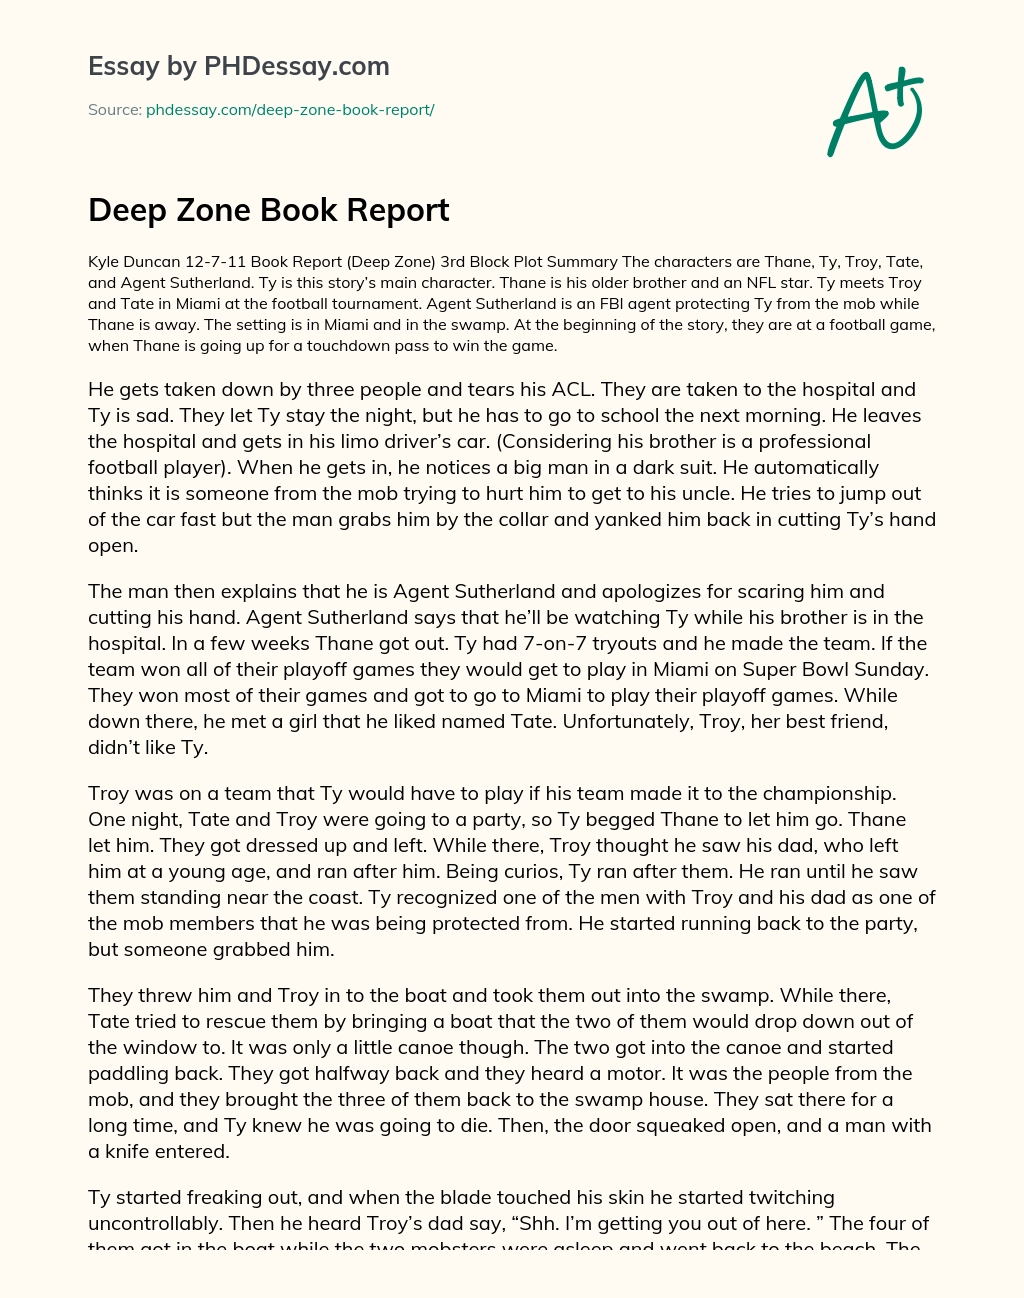 Deep Zone Book Report essay